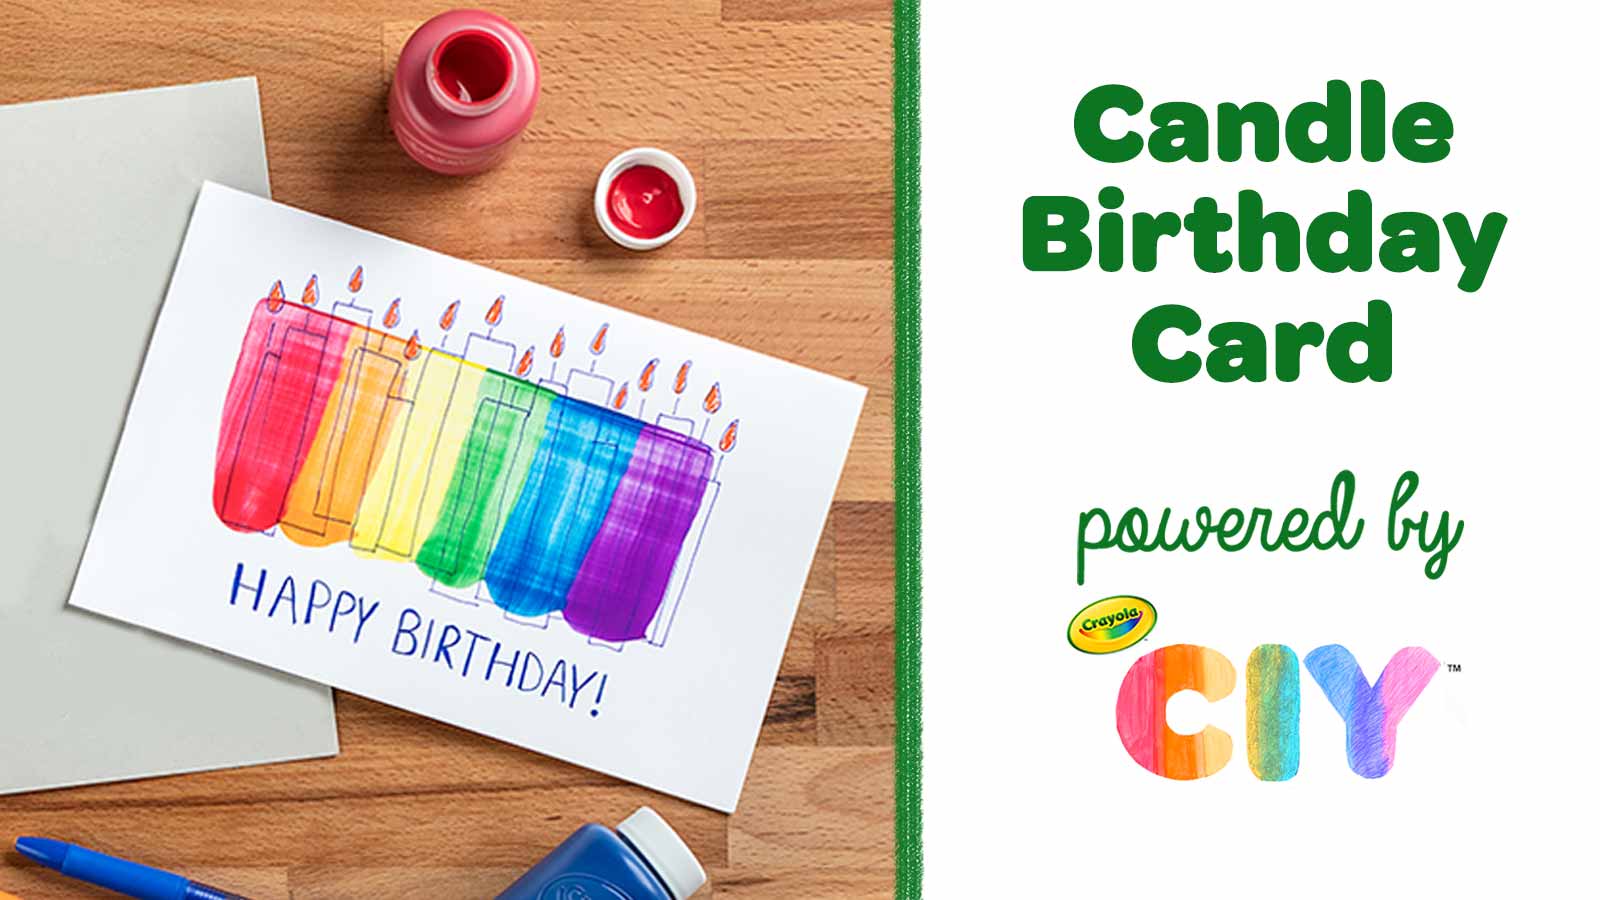 https://www.crayola.com/-/media/Crafts-New/Poster-Frames/Candle-Birthday-Card_Poster-Frame.jpg